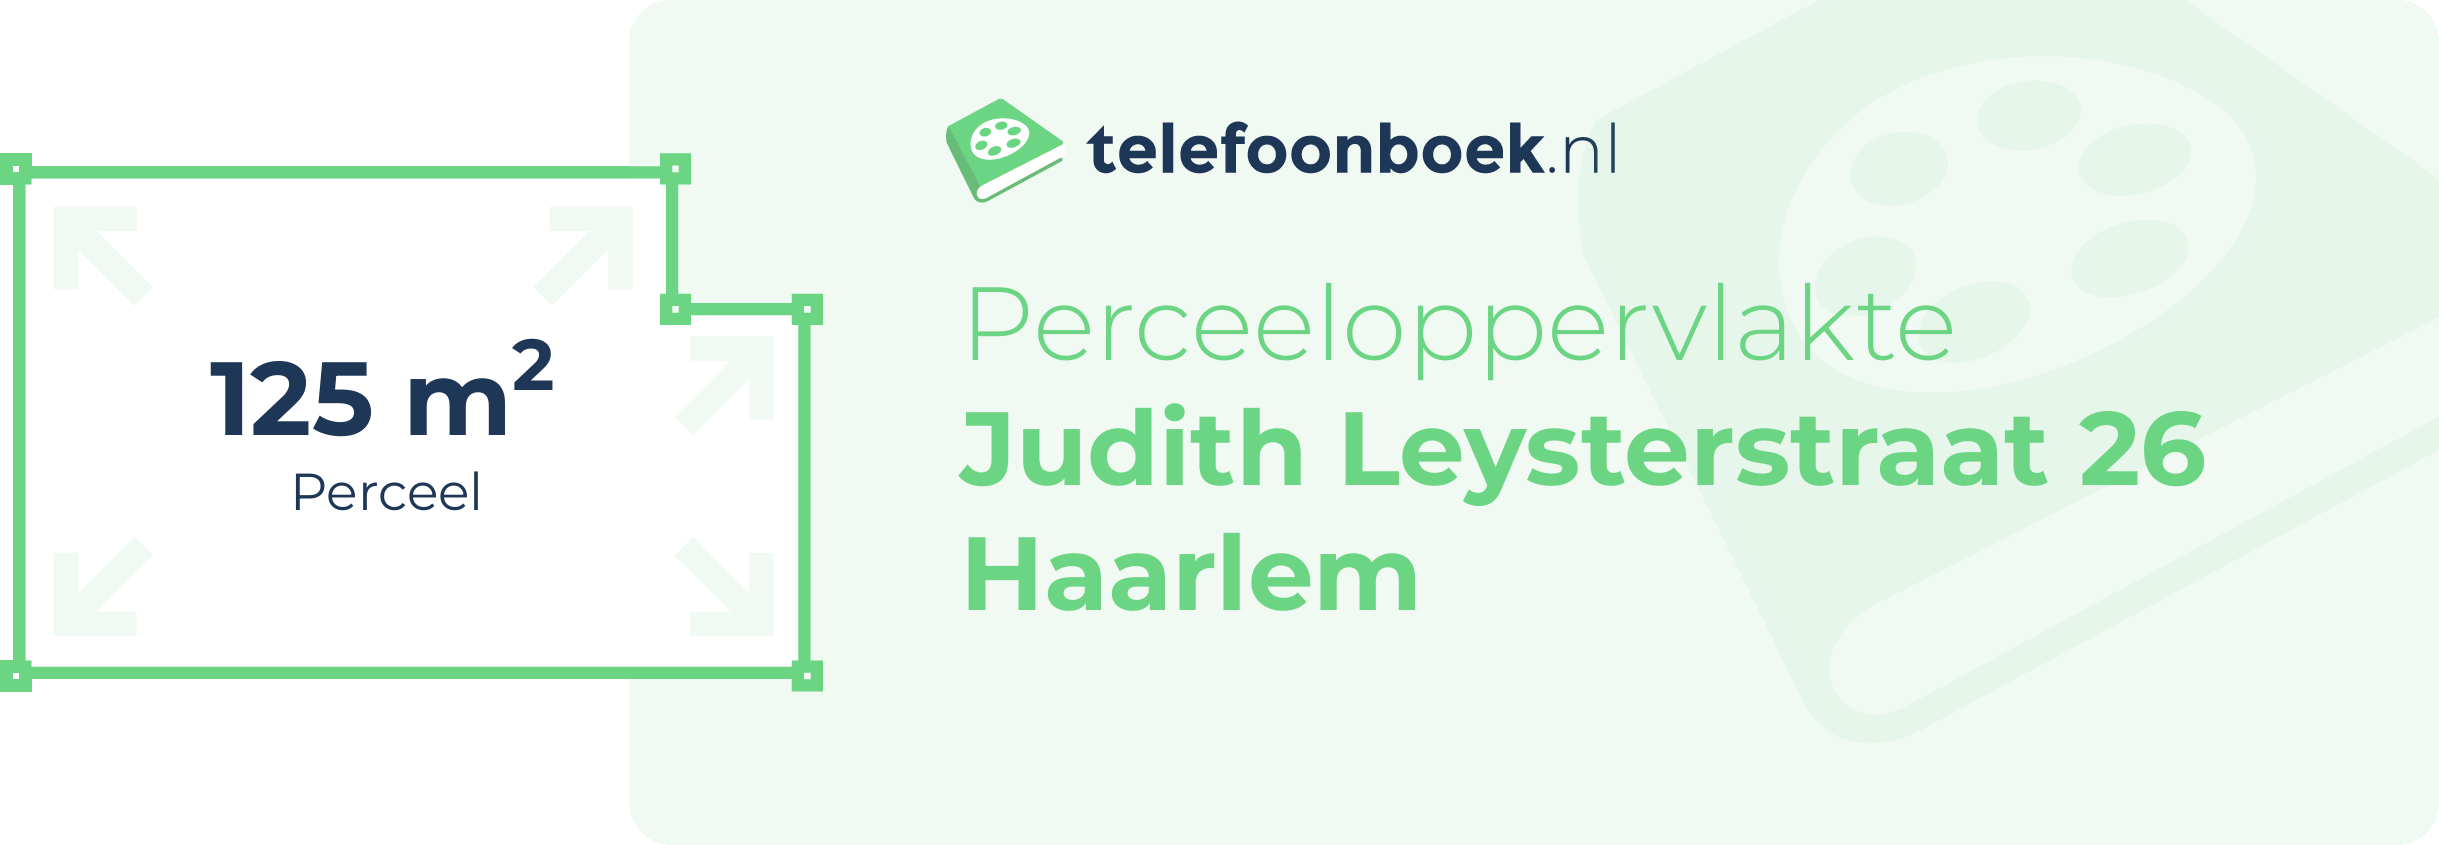 Perceeloppervlakte Judith Leysterstraat 26 Haarlem